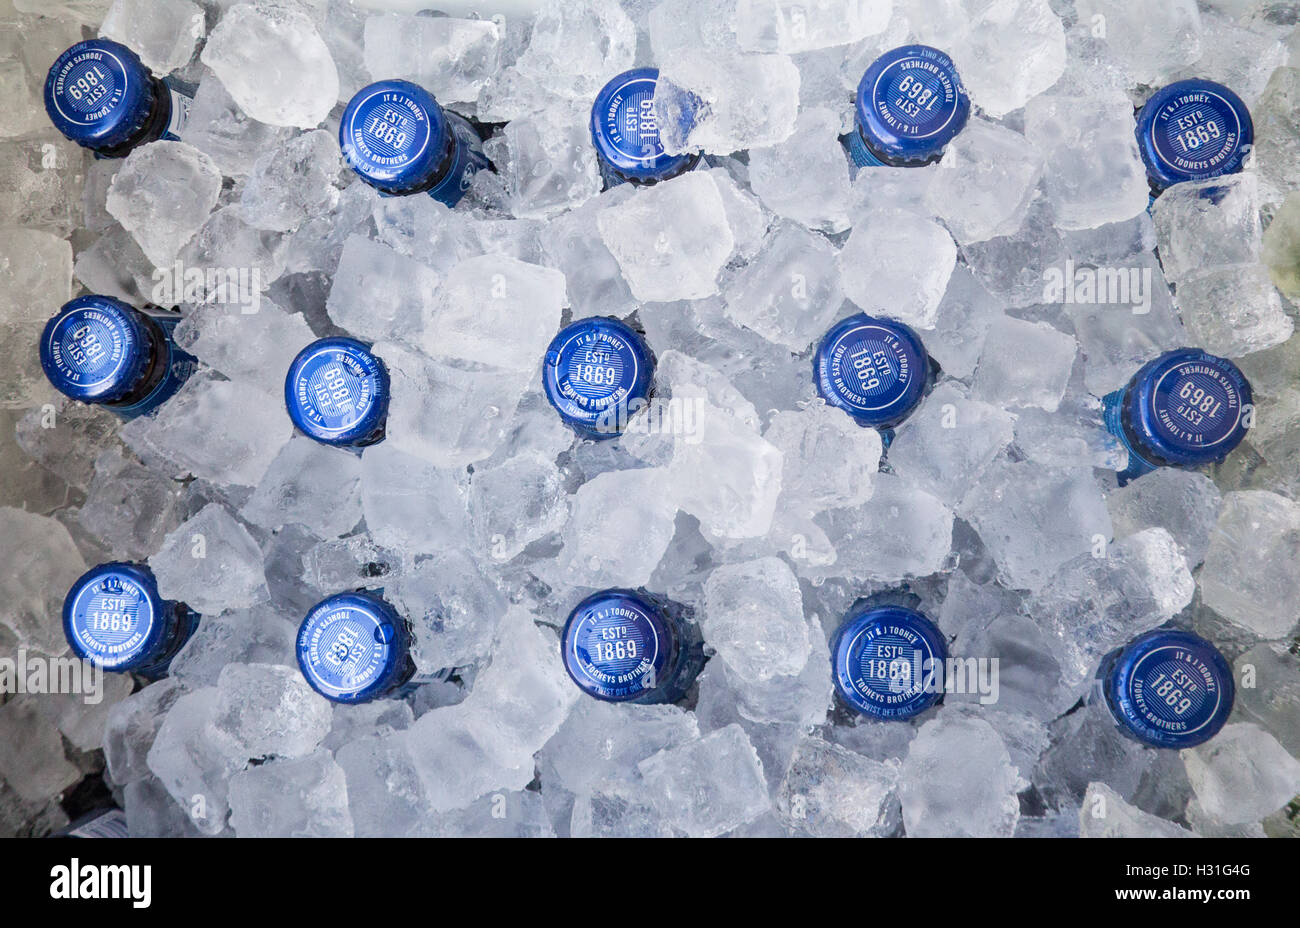 Beer bottle tops in ice cubes in esky portable fridge refrigerator unit NSW Australia Stock Photo